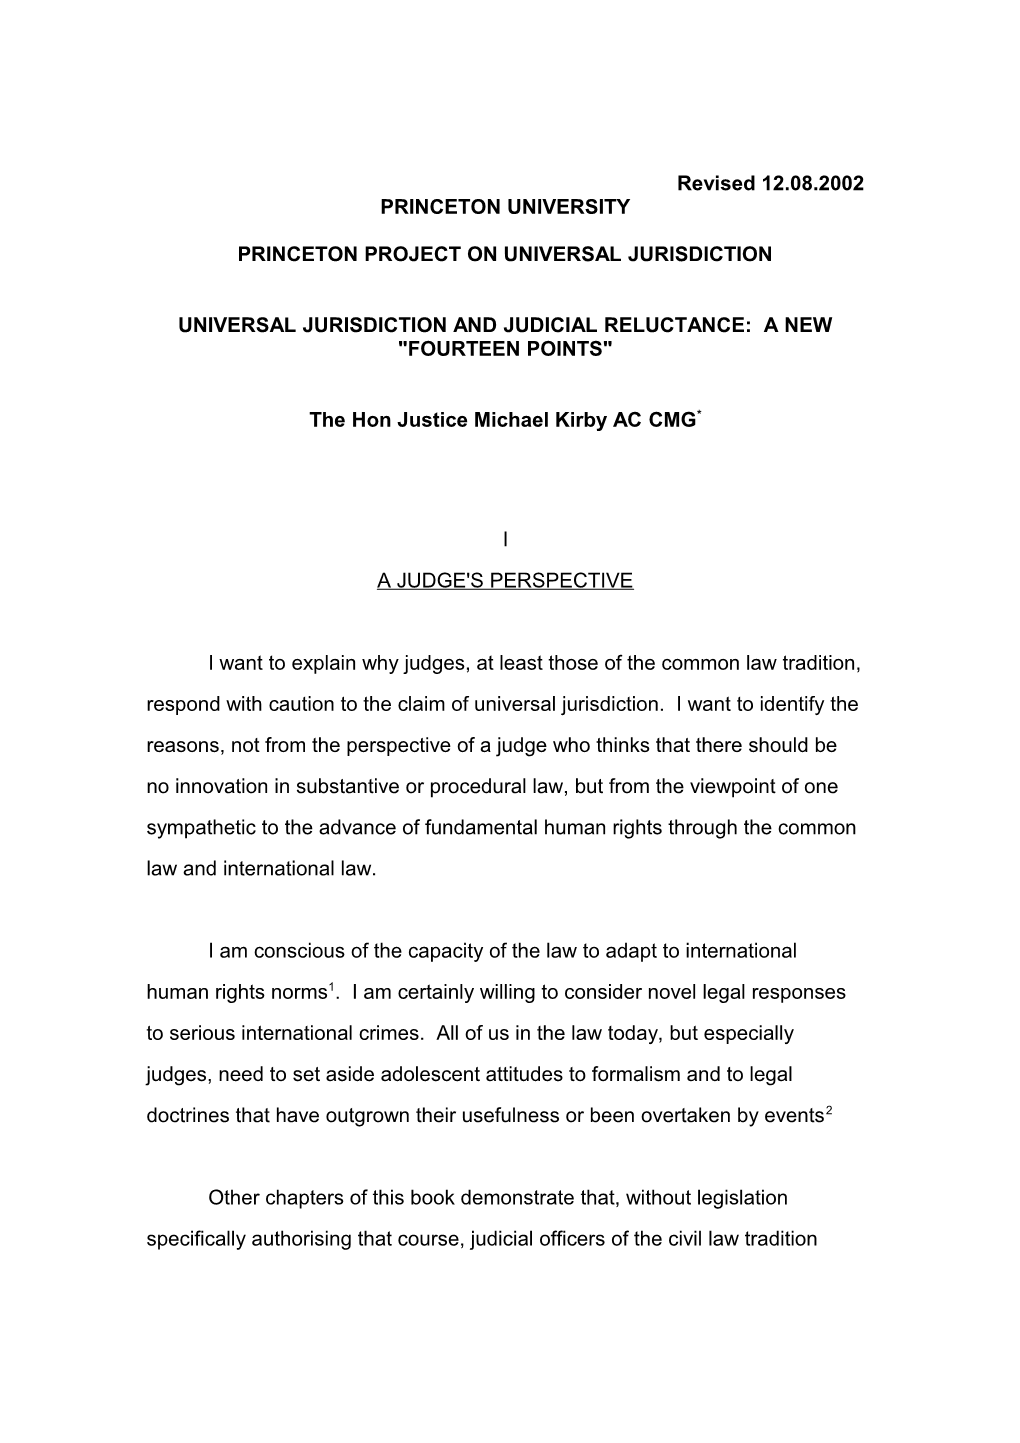 Princeton Project on Universal Jurisdiction